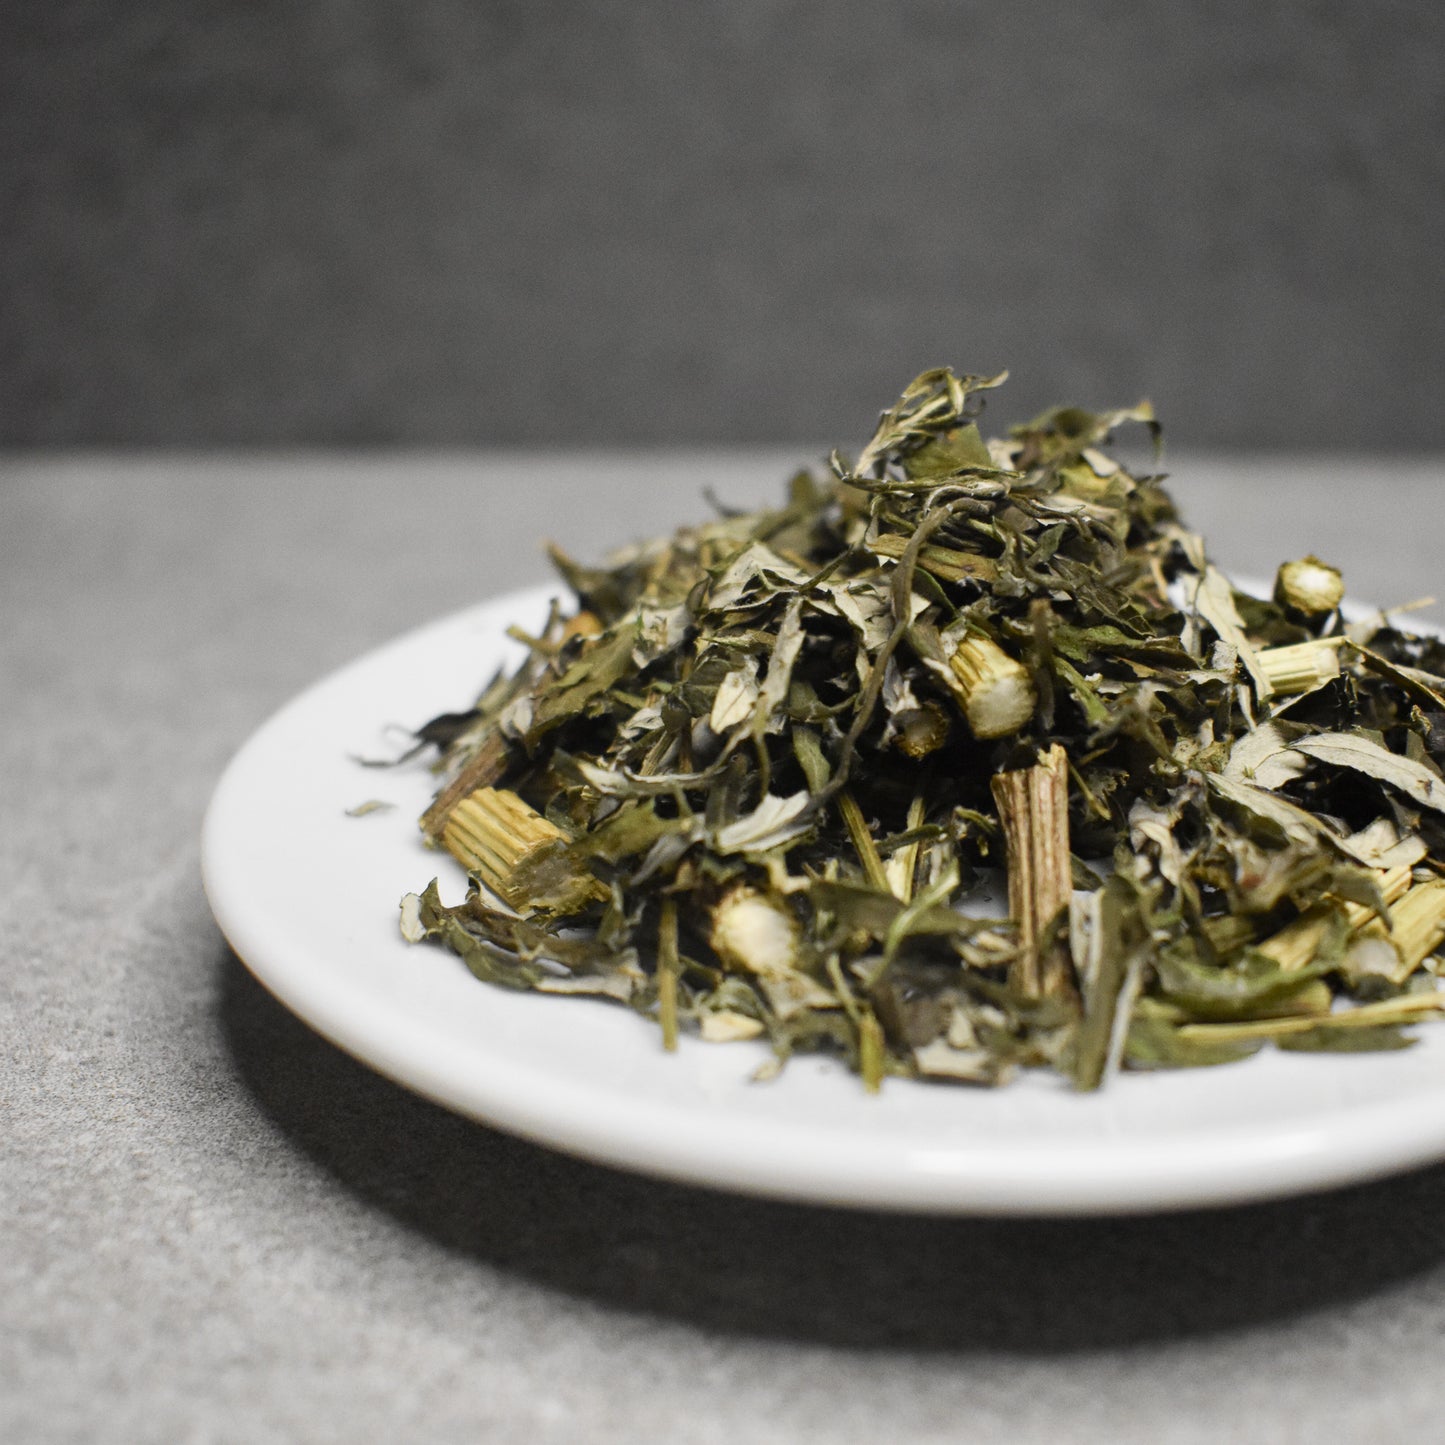 Yomogicha - Mugwort Herbal Tea